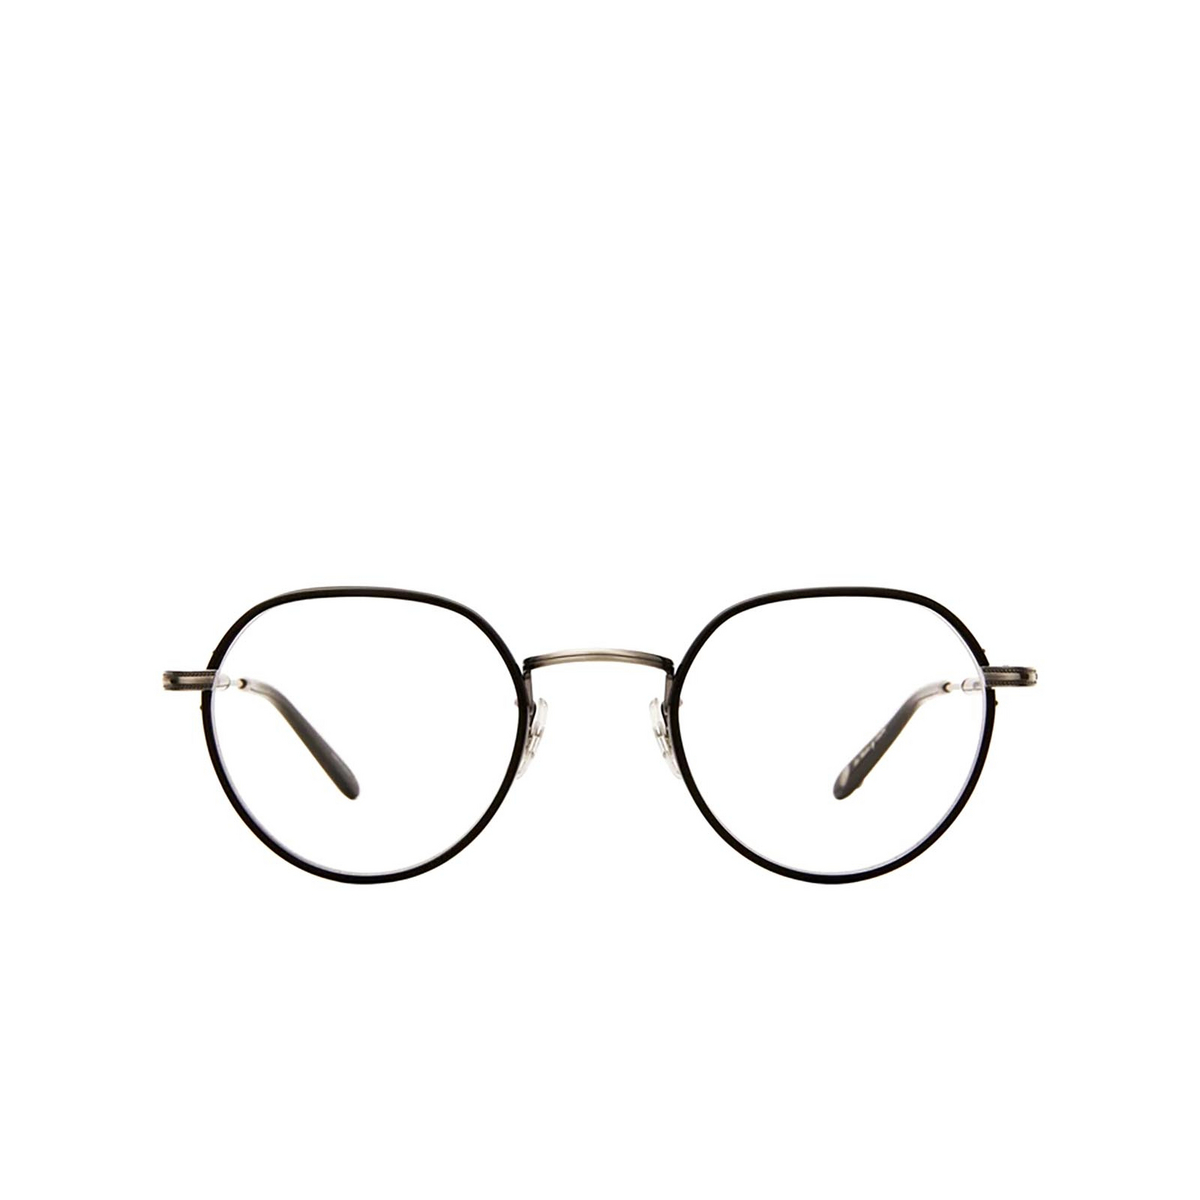 Garrett Leight® Round Eyeglasses: Robson W color Black-pewter Bk-pw-bk - front view.